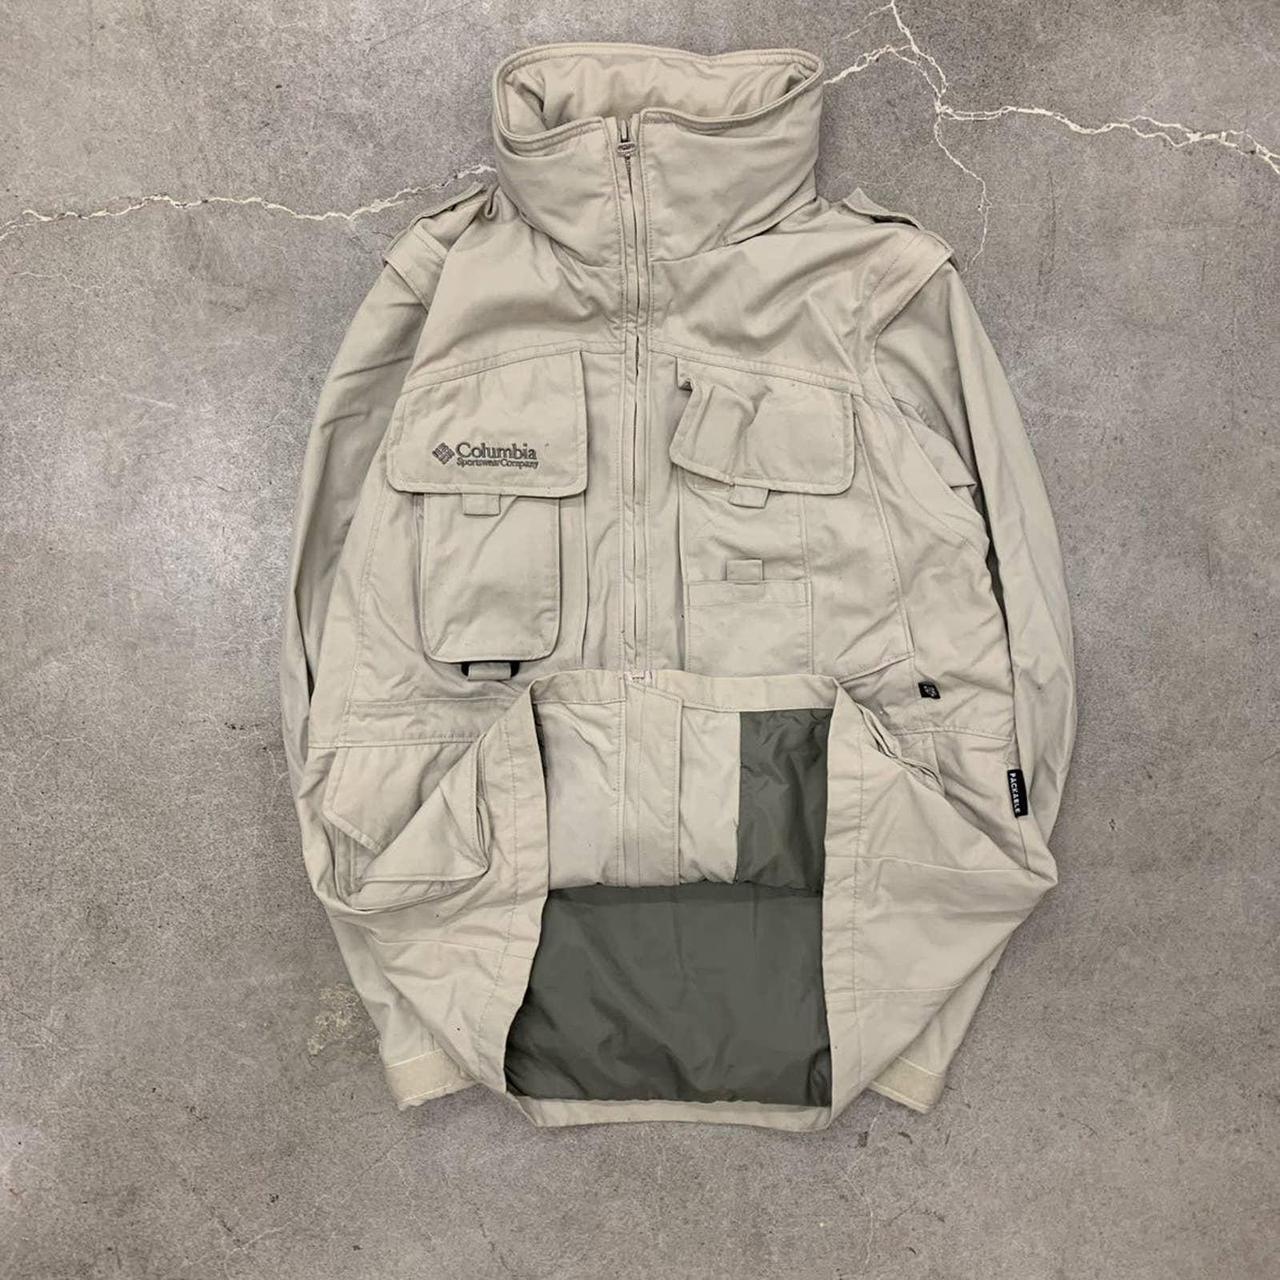 Columbia vintage multi cargo fishing jacket - Depop